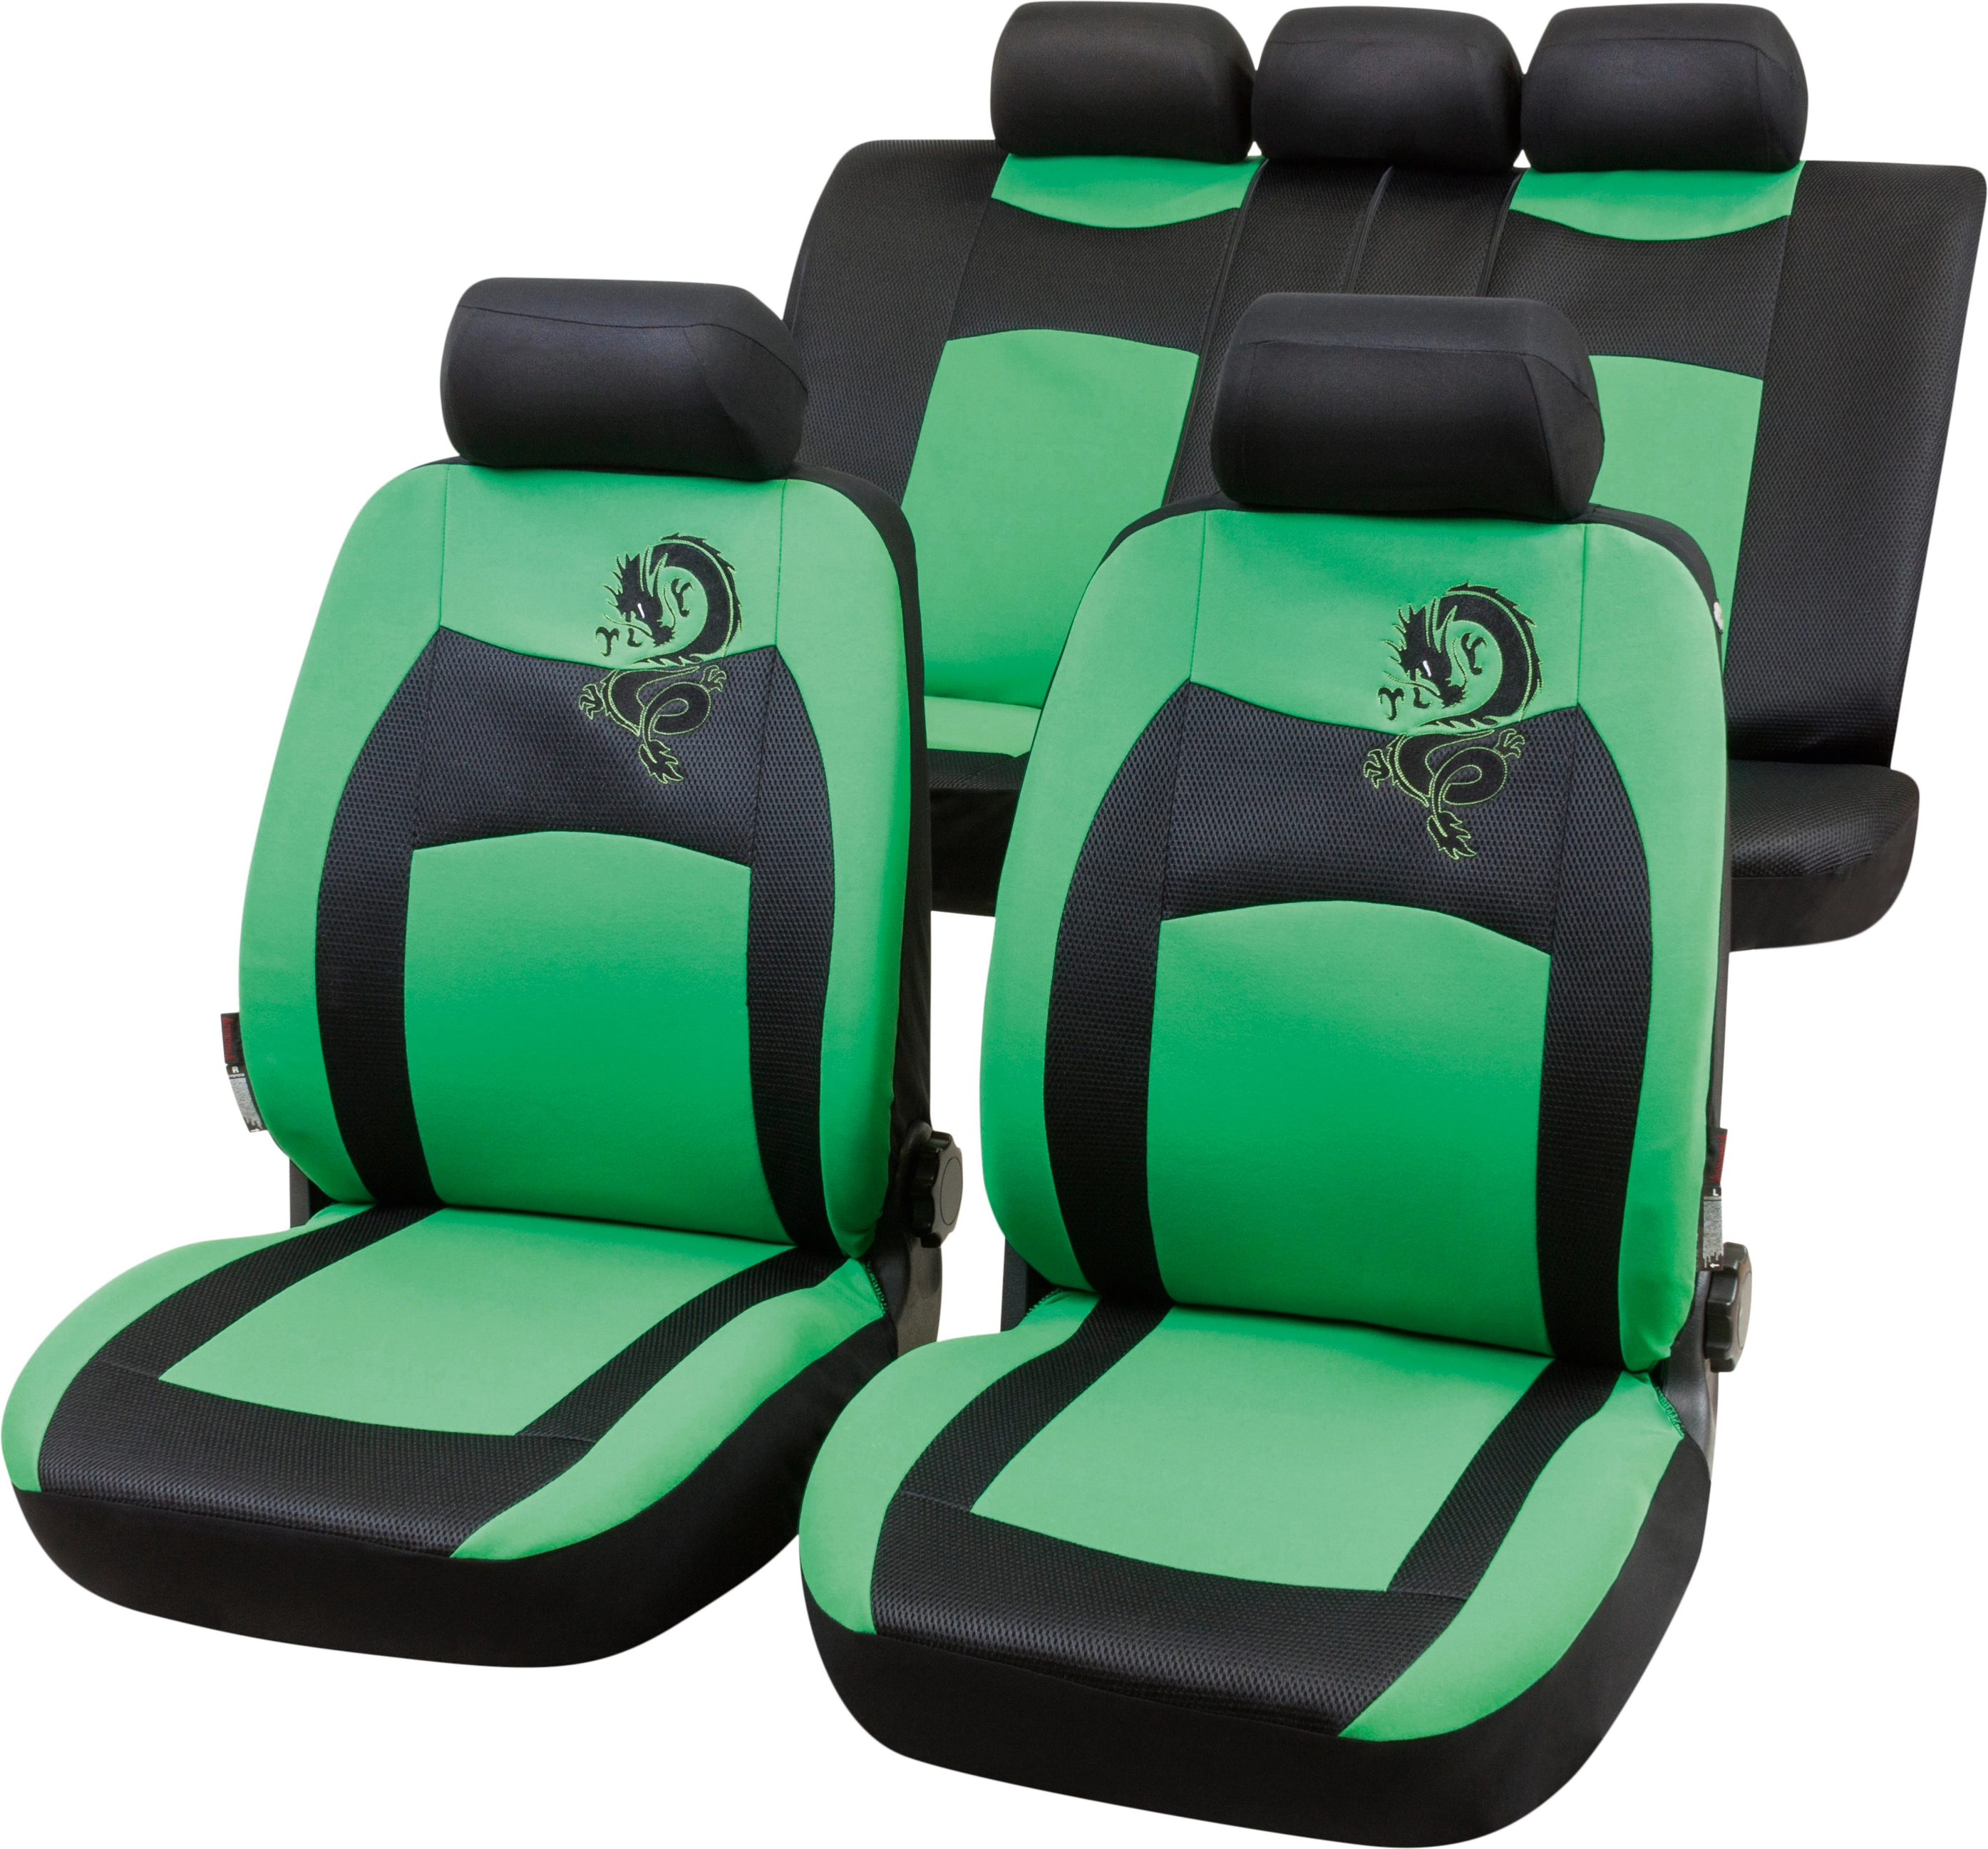 OBI Sitzbezug Komplett-Set Dragon Schwarz-Grün kaufen bei OBI